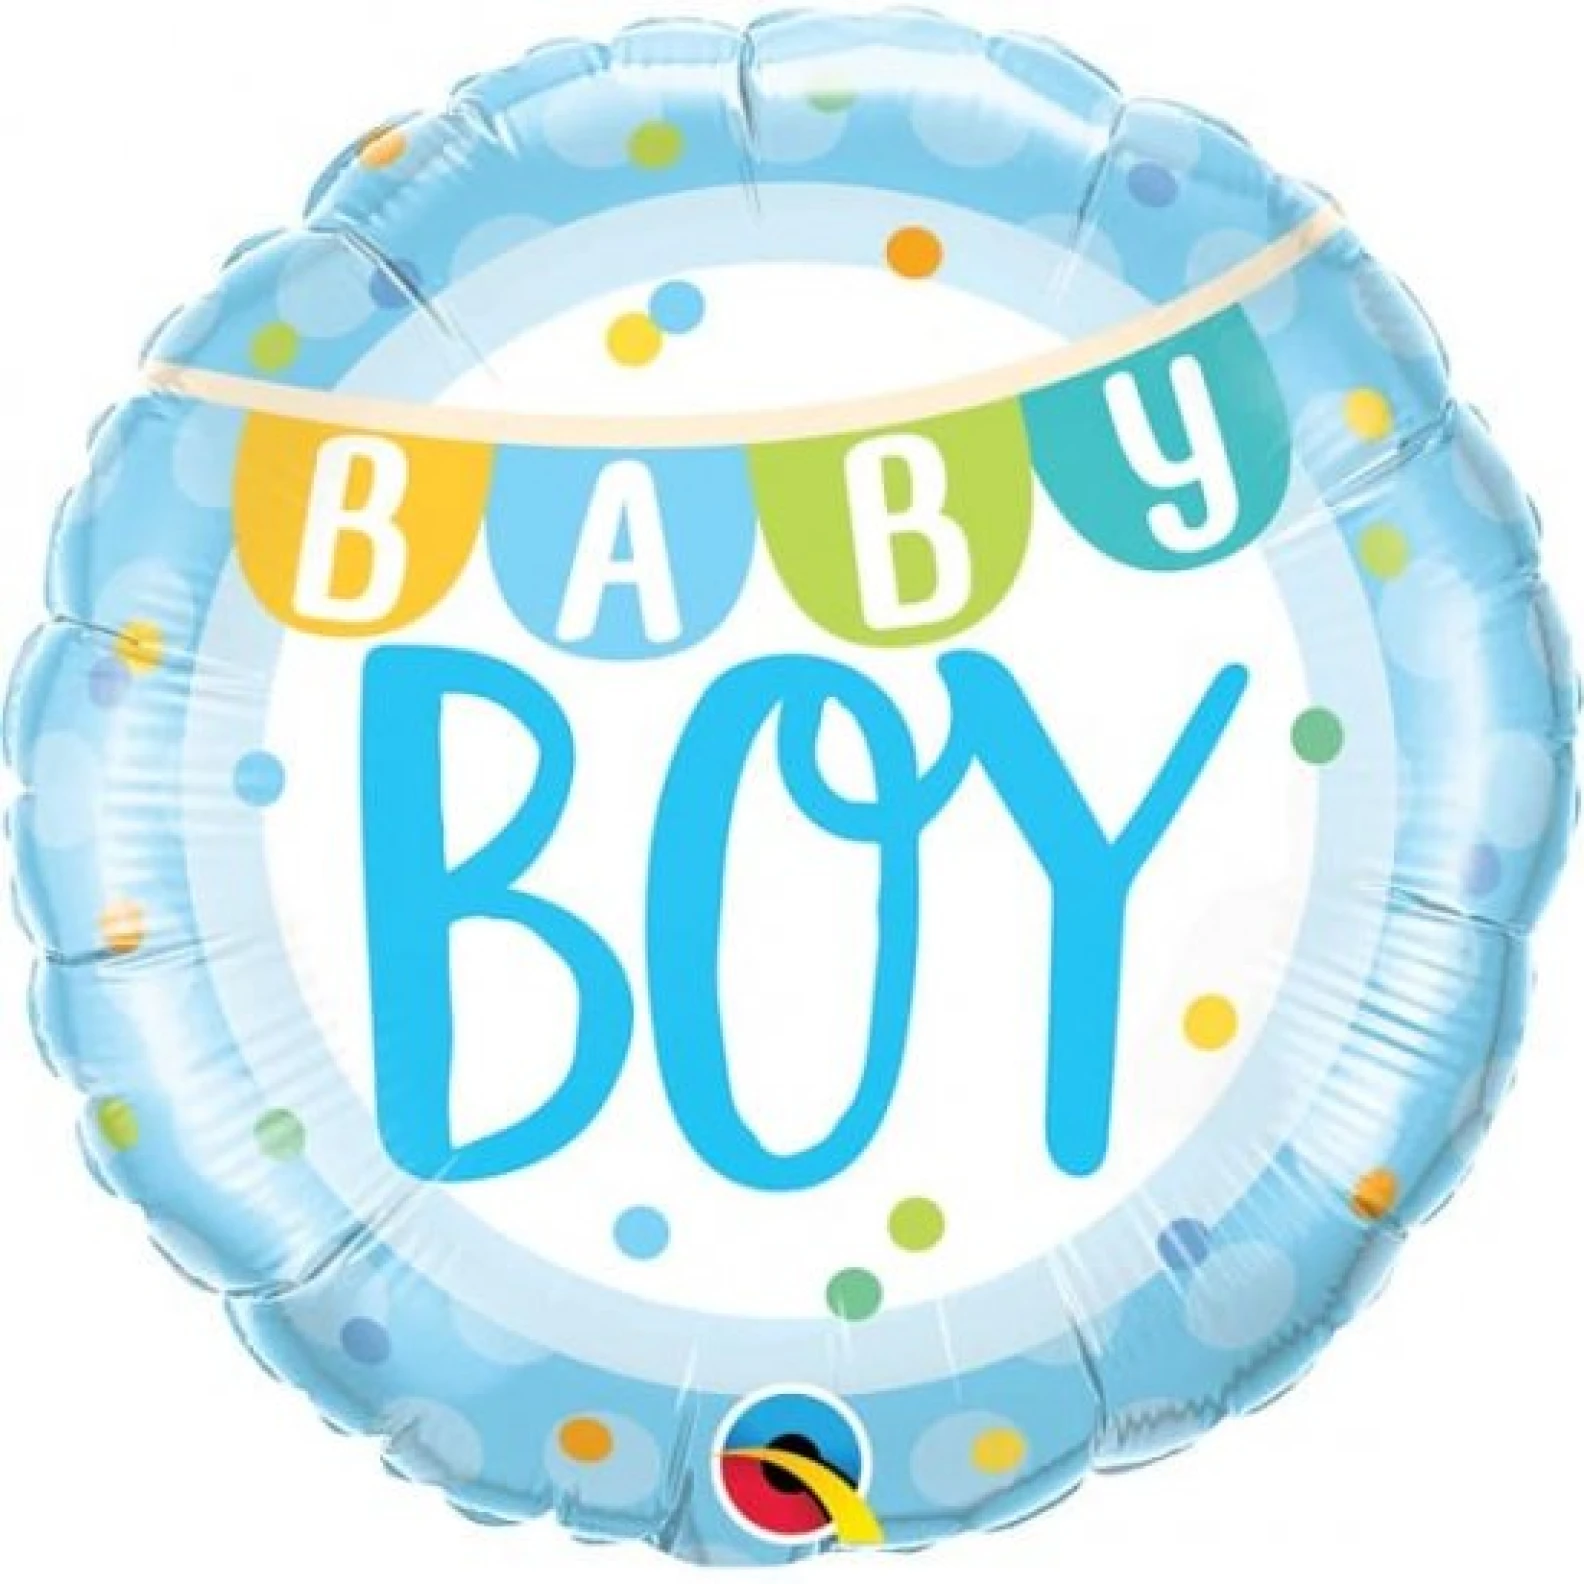 Baby Boy Colourful Foil Balloon - image №1